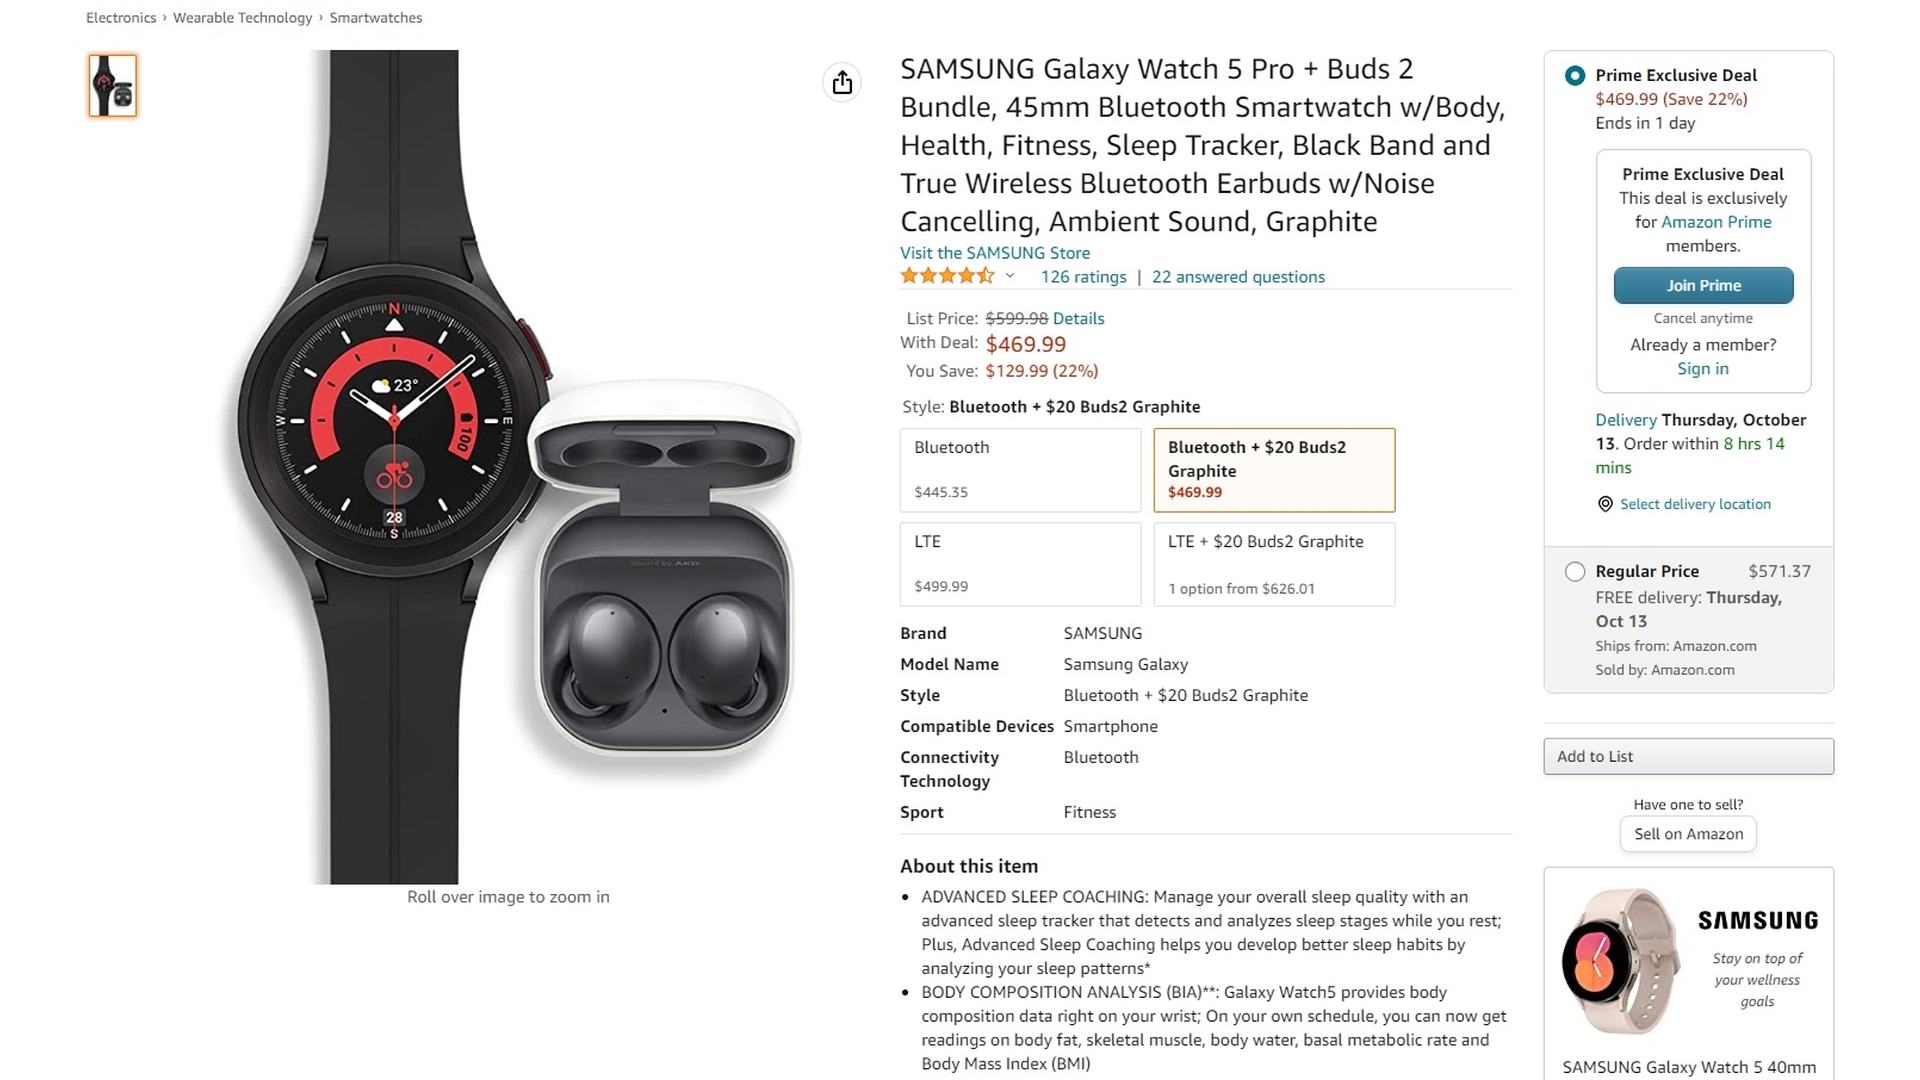 samsung galaxy watch 5 pro bundle amazon prime early access sale